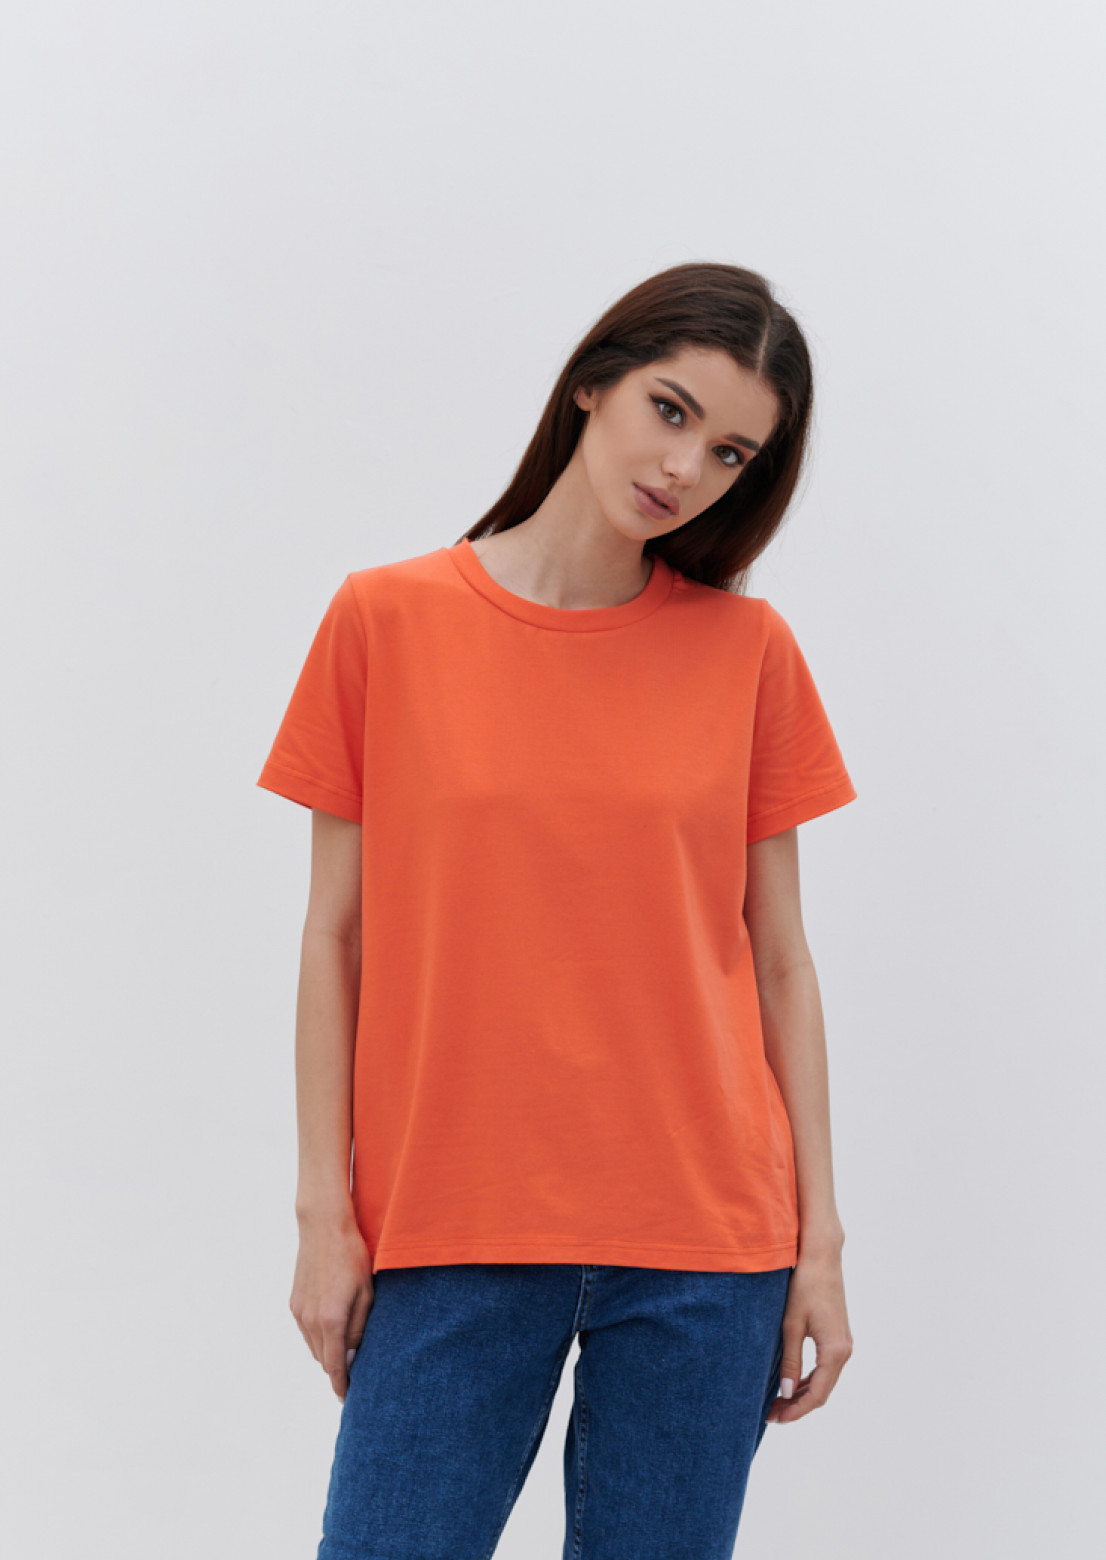 Carrot colour blank T-shirt